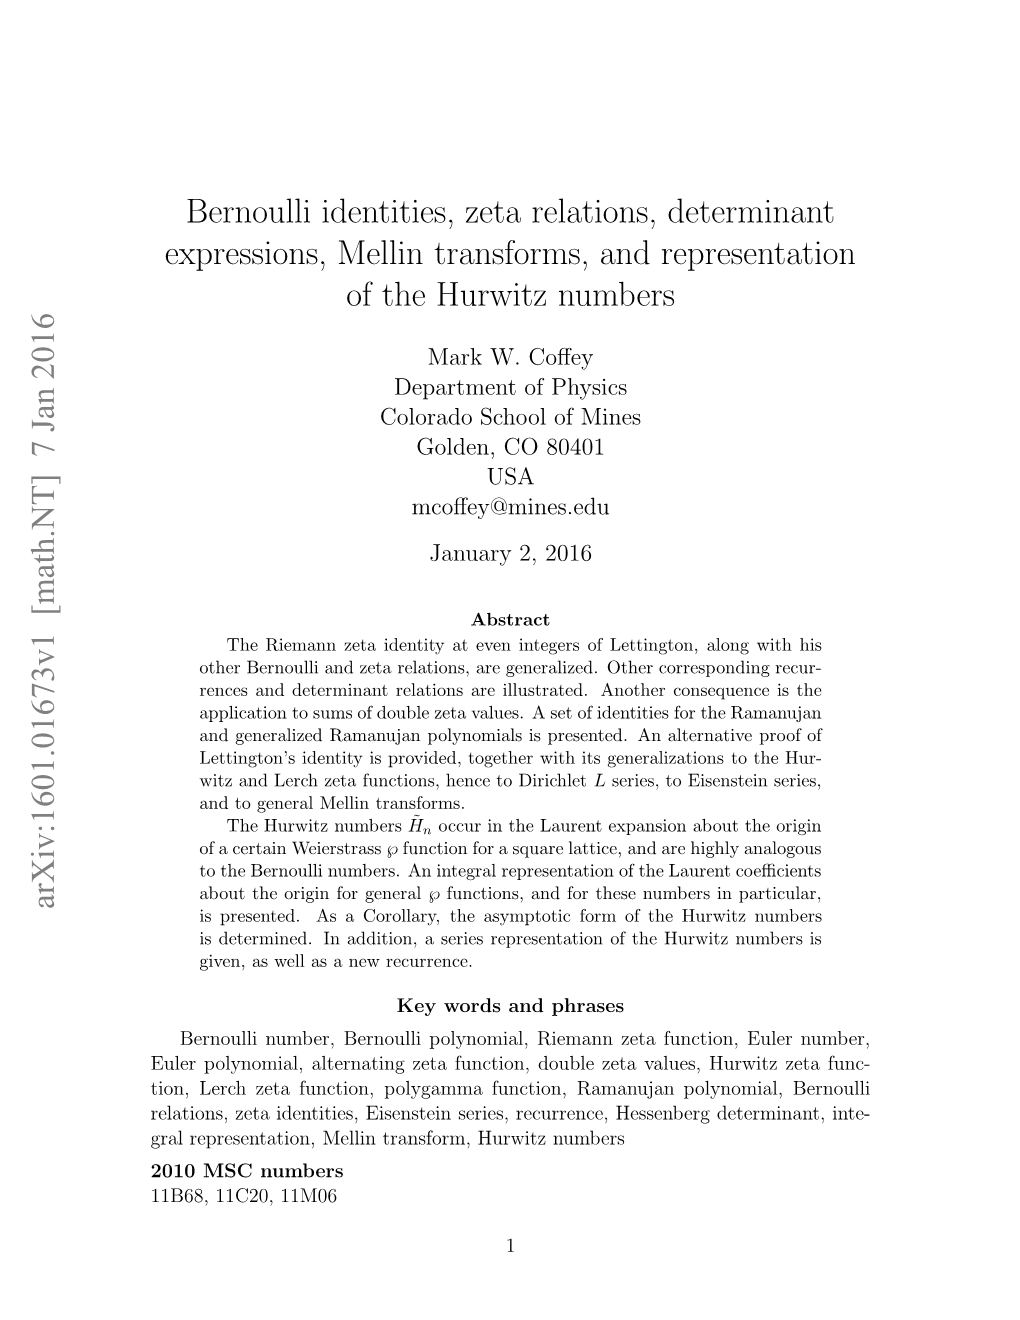 Bernoulli Identities, Zeta Relations, Determinant Expressions, Mellin